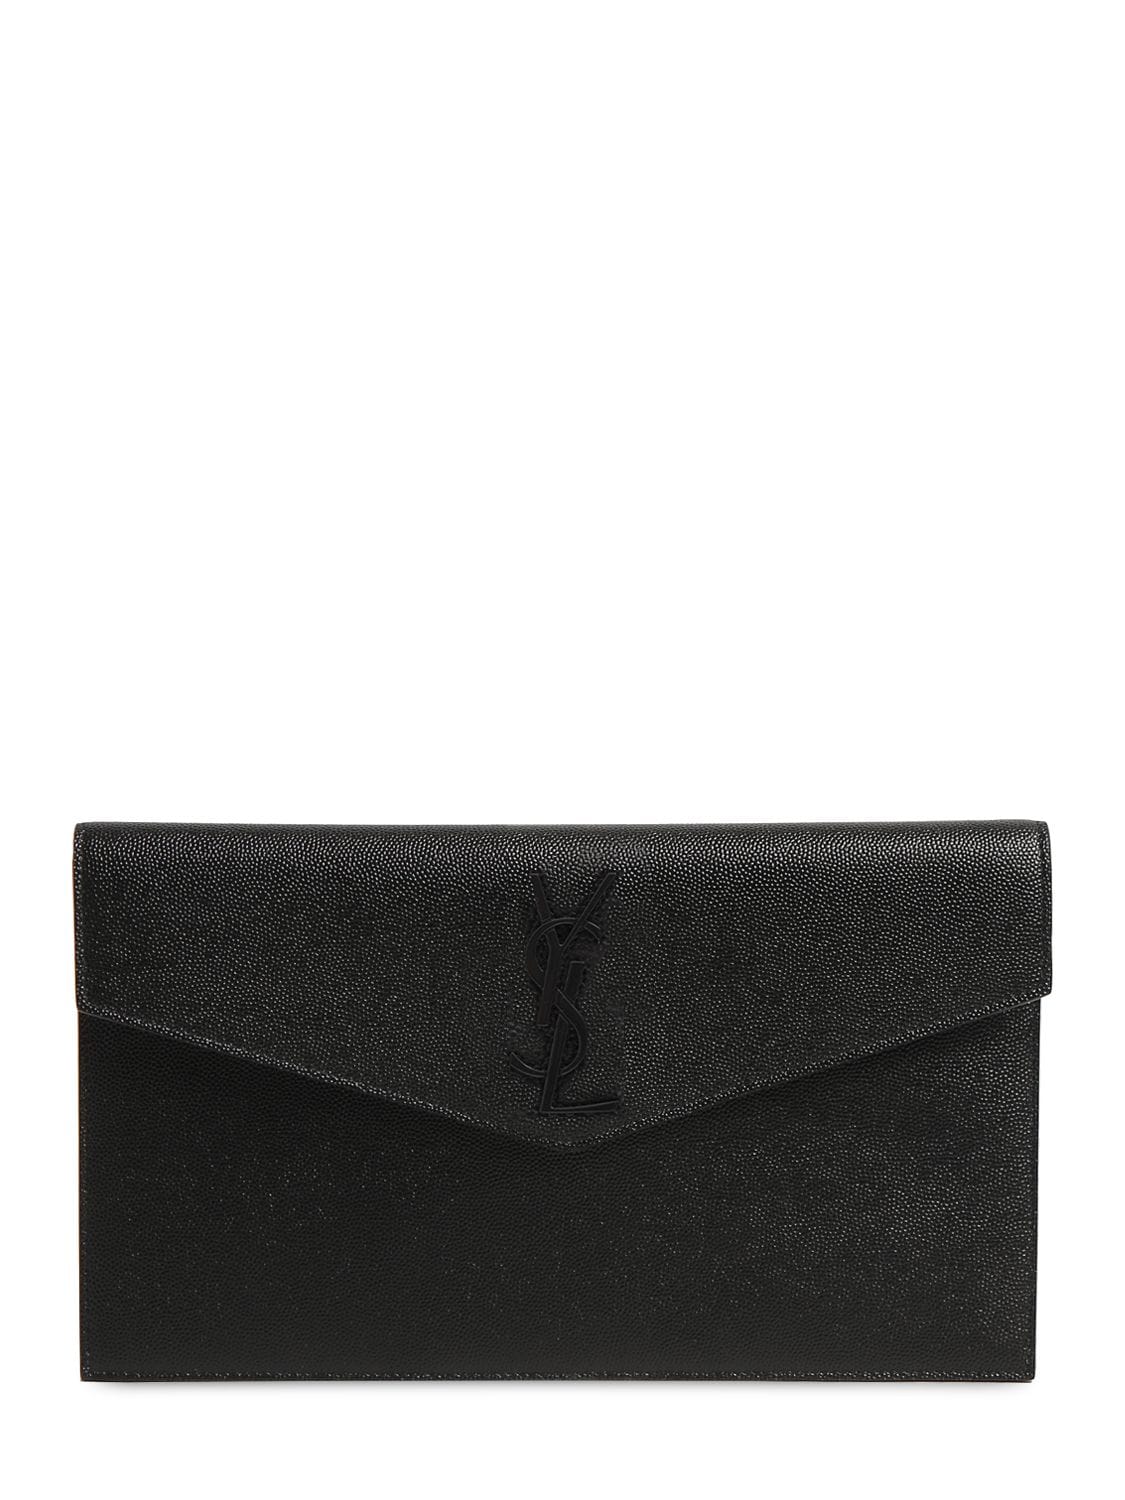 Saint Laurent // Black Uptown Monogram Pebbled Leather Clutch